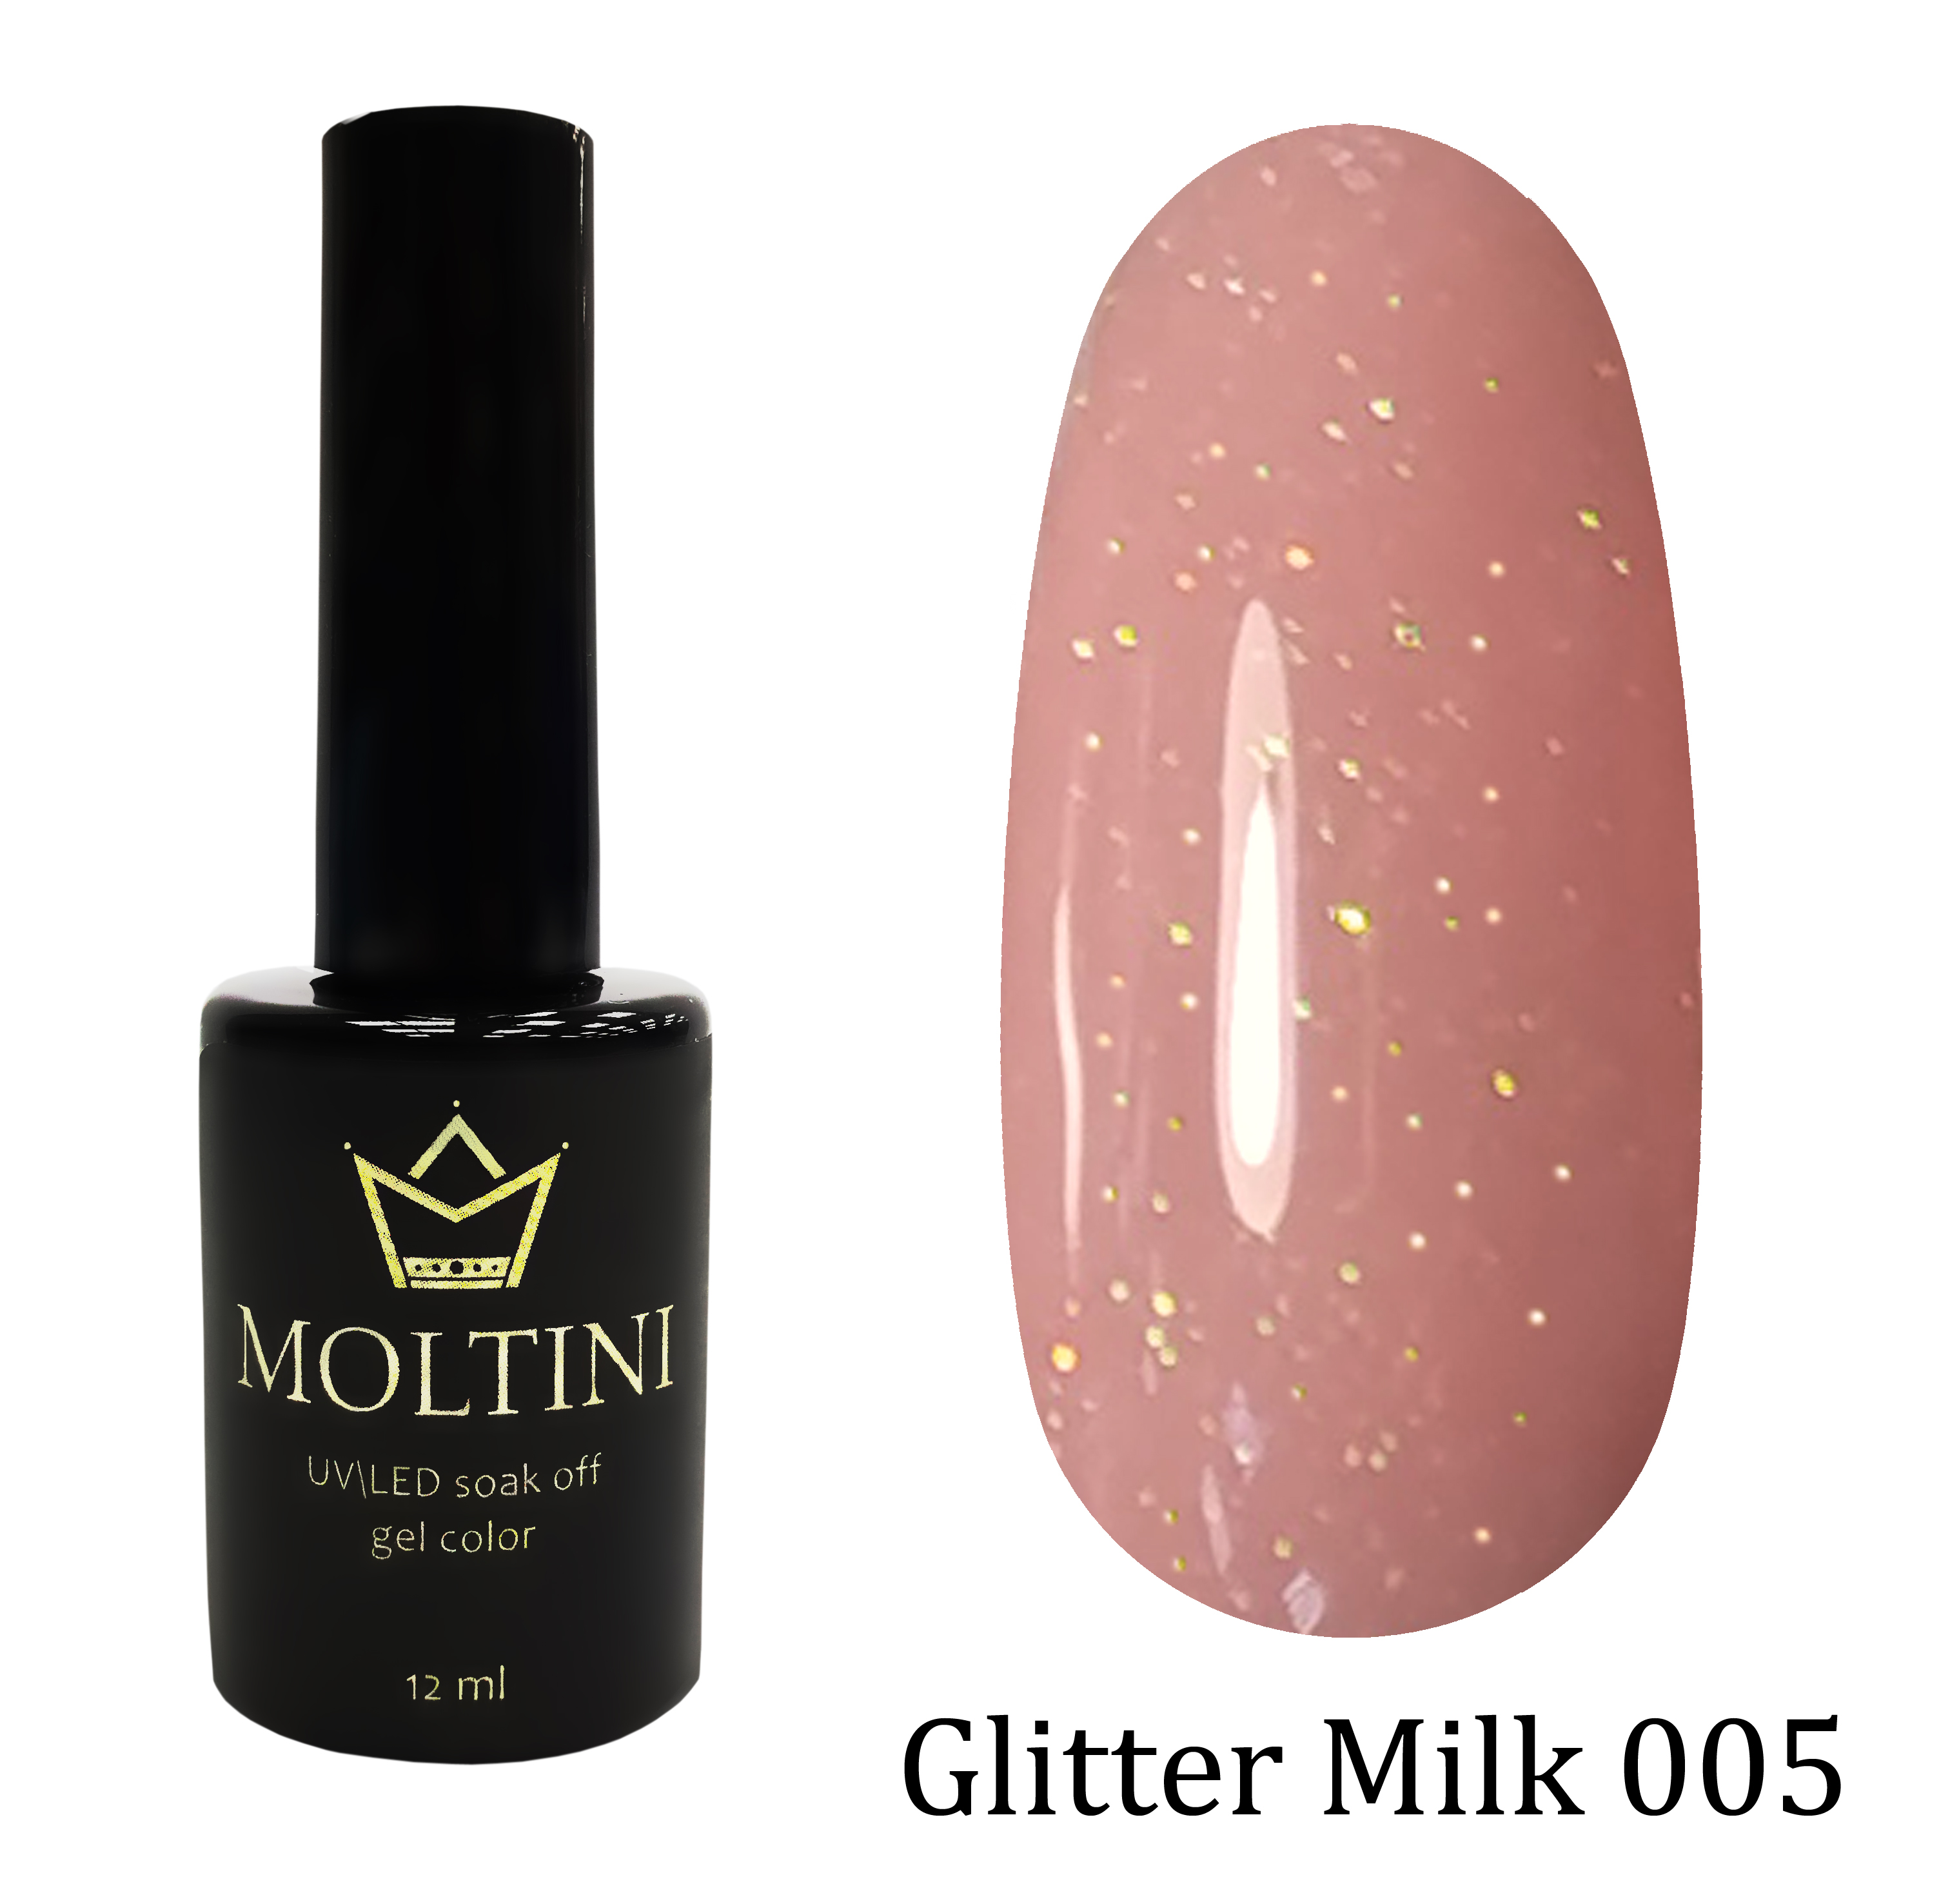 Moltini цветной гель-лак Glitter Milk 005, 12 мл